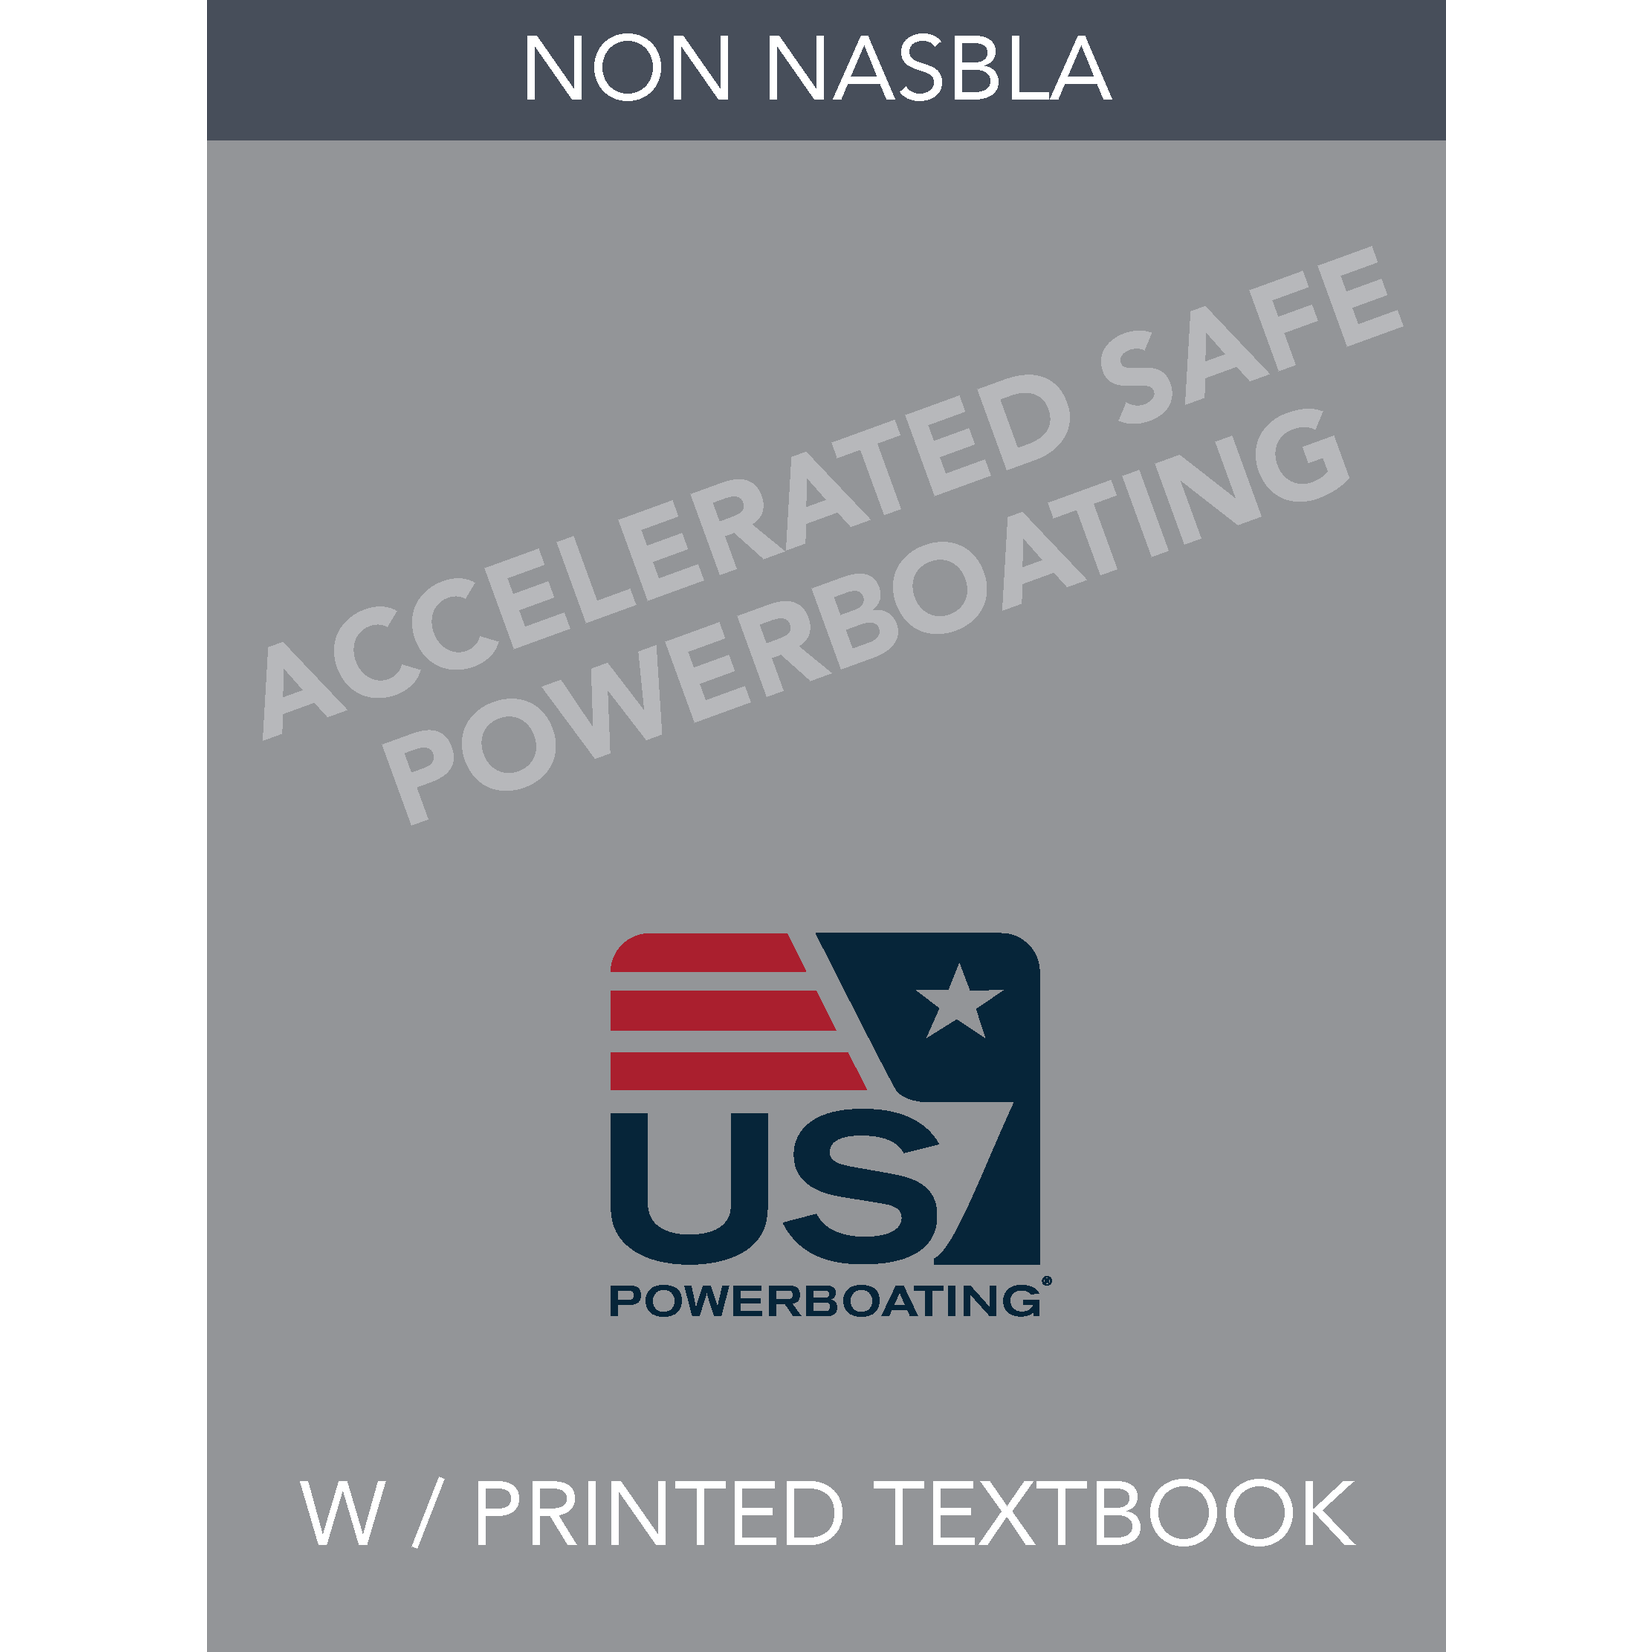 Accelerated (Non-NASBLA) Safe Powerboat Handling